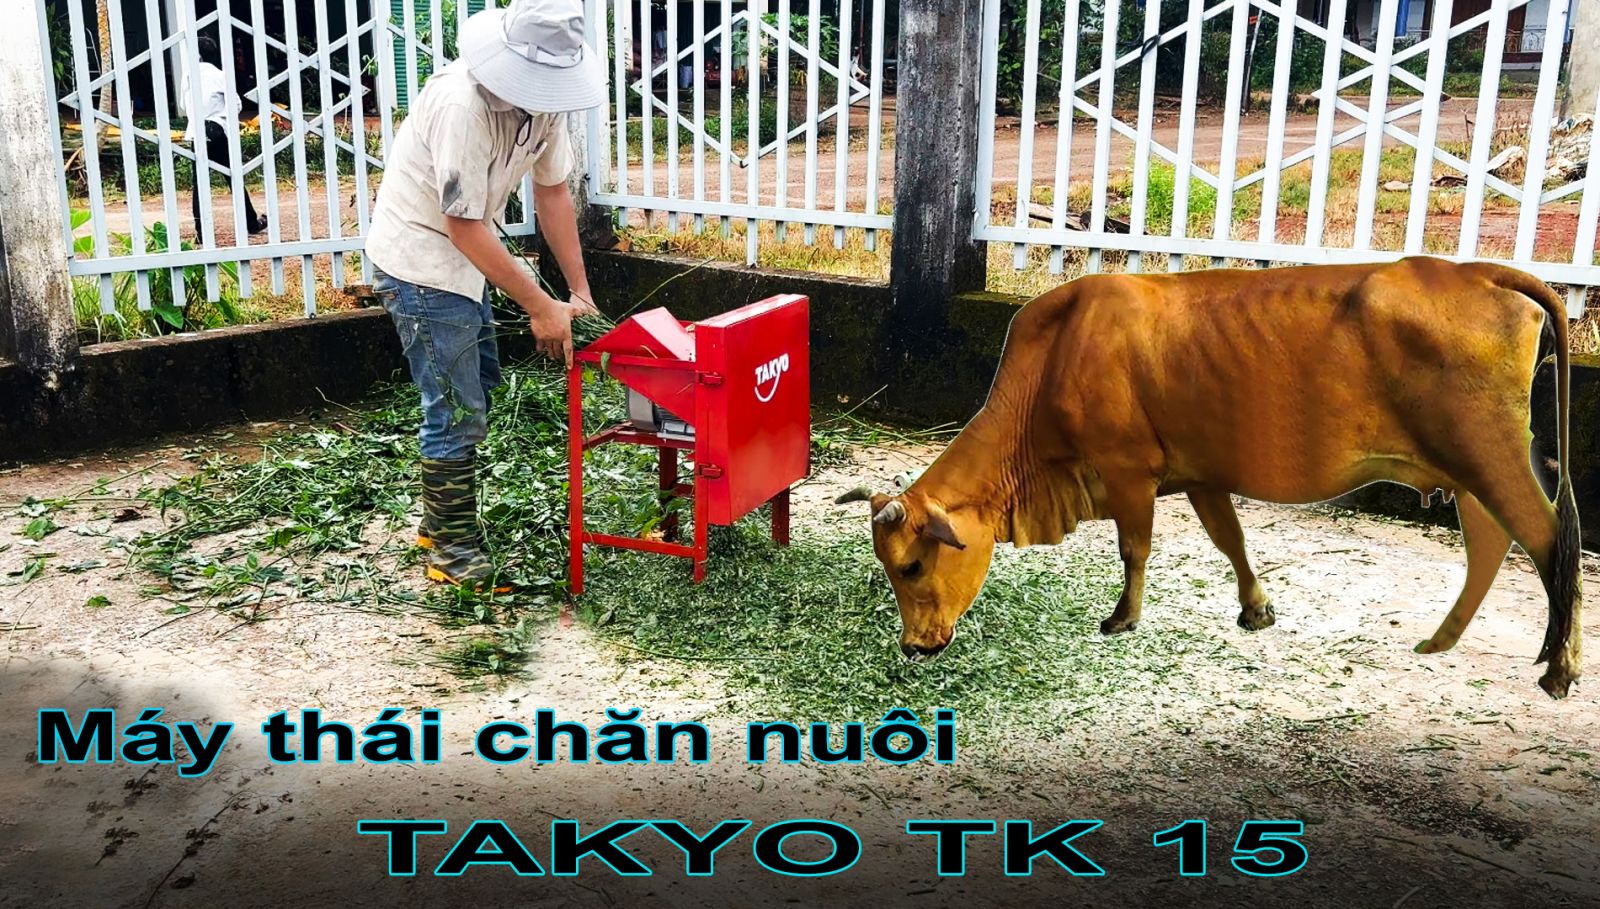 bao-gia-may-thai-chuoi-chan-nuoi-takyo-tk1500